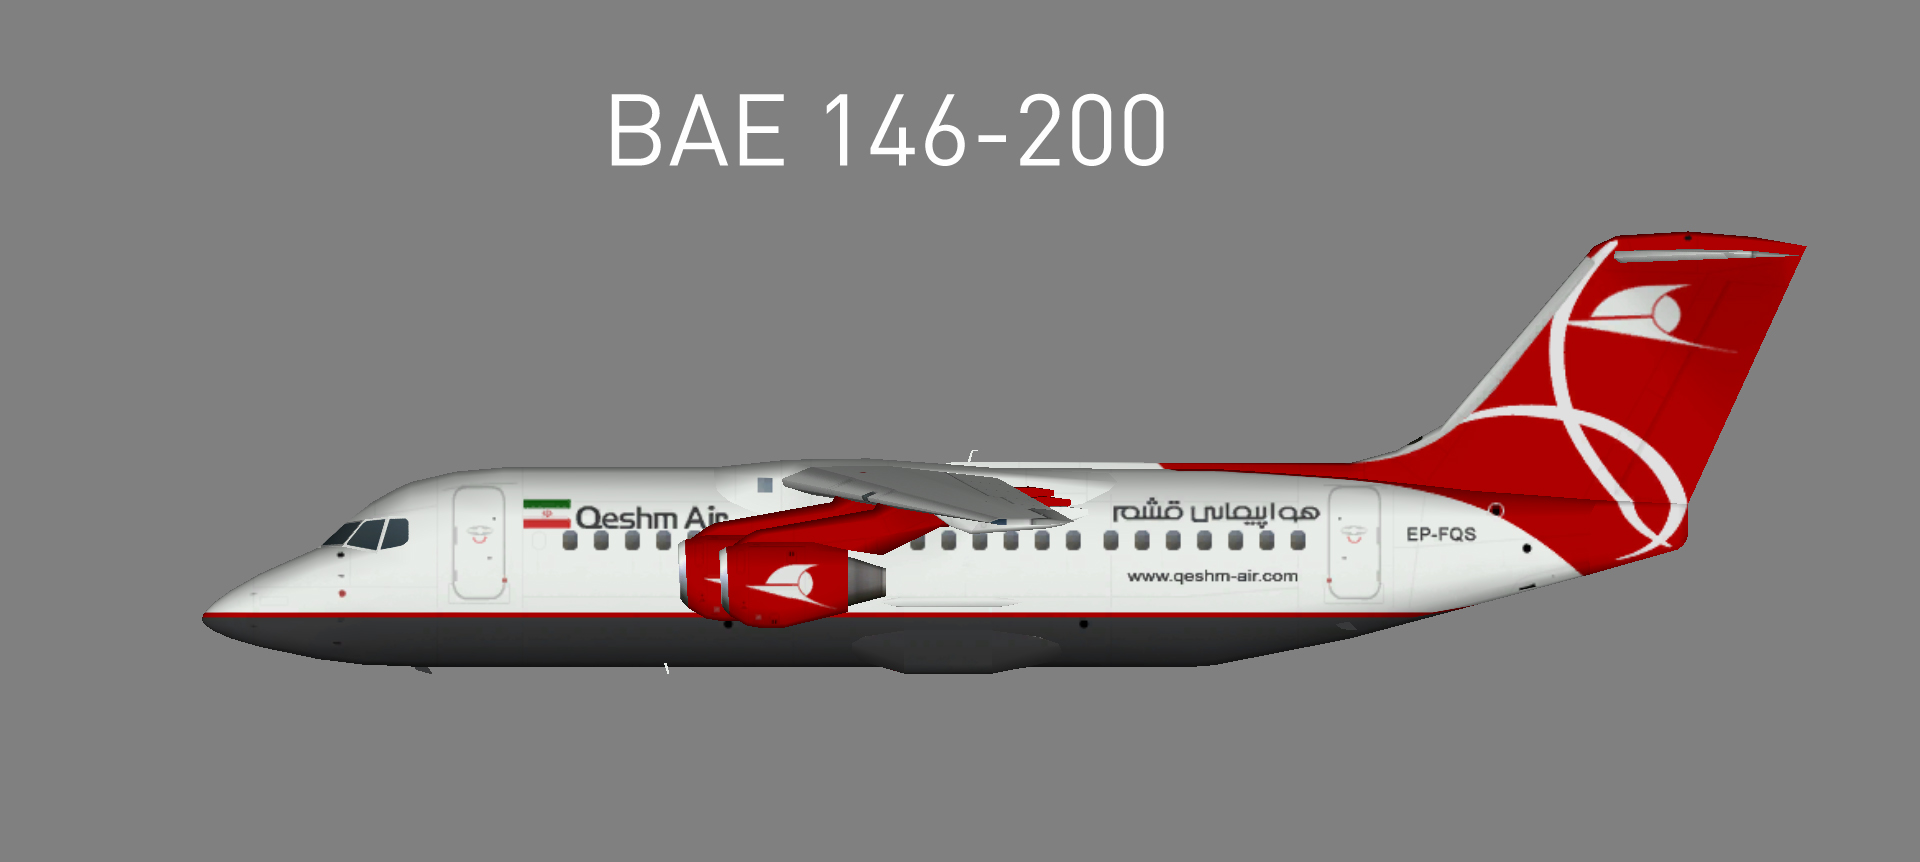 Qeshm Air BAE 146-200